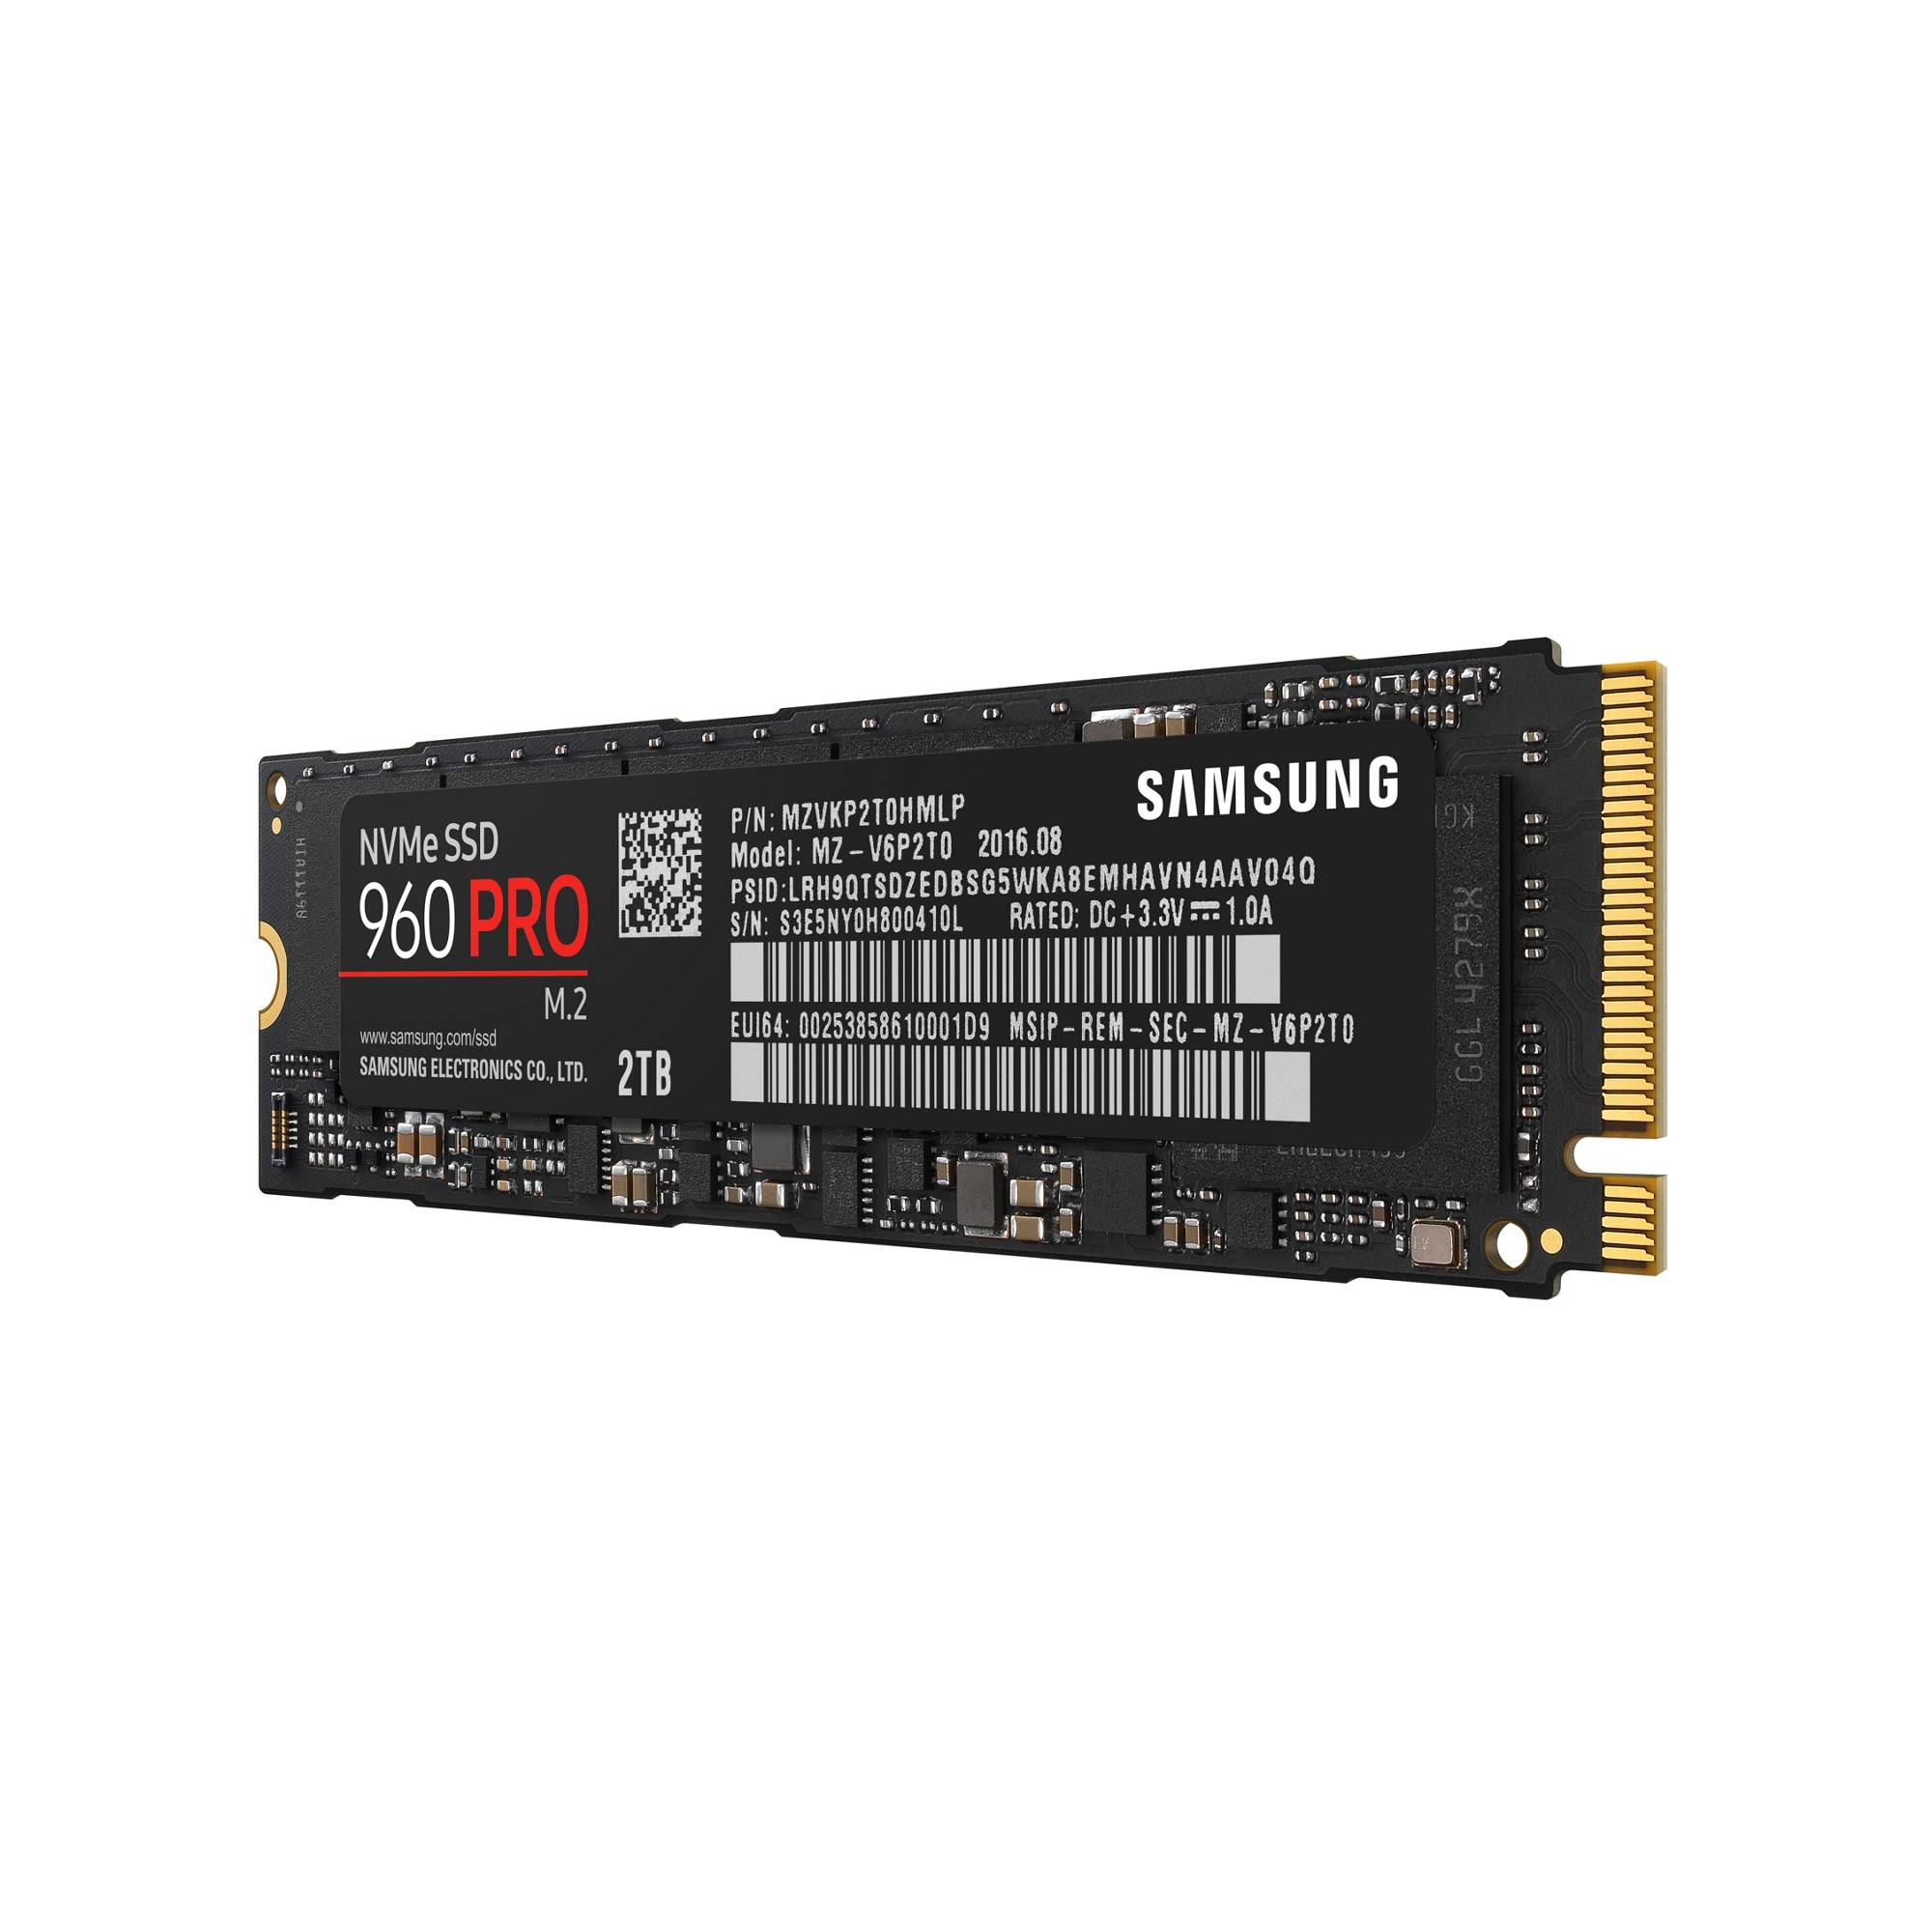 NEMIX RAM N8802-068 NEC Express5800/R320e 128GB (4x32GB) RDIMMメモリ 